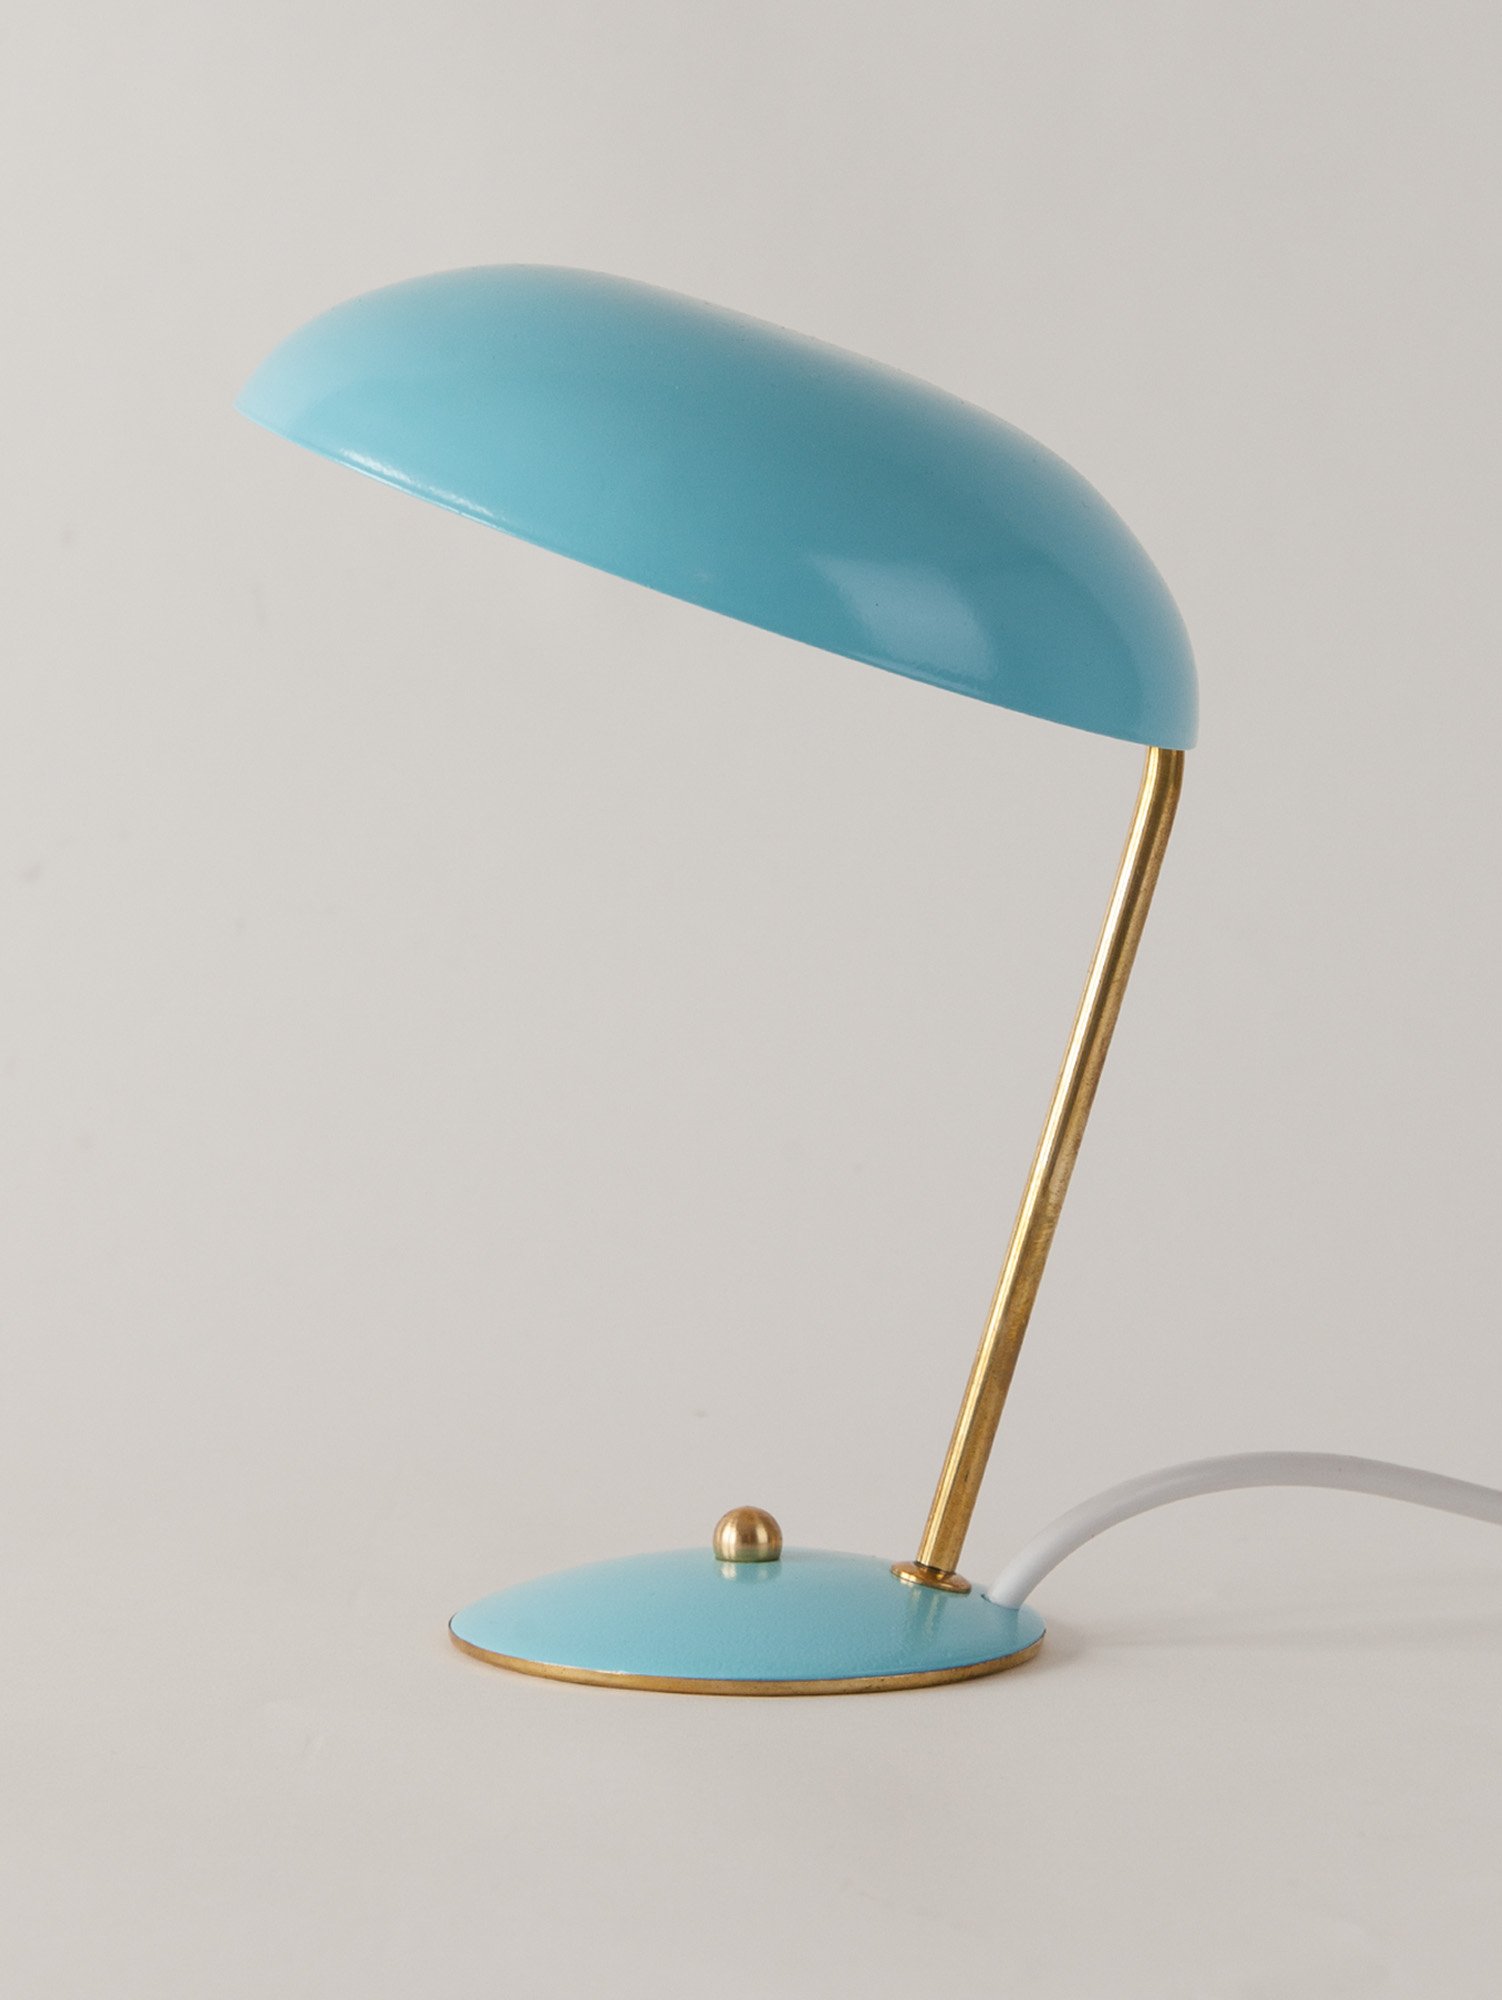 Aesthetiker  Large Brass and Glass italian Table Lamp, 1950s — Aesthetiker